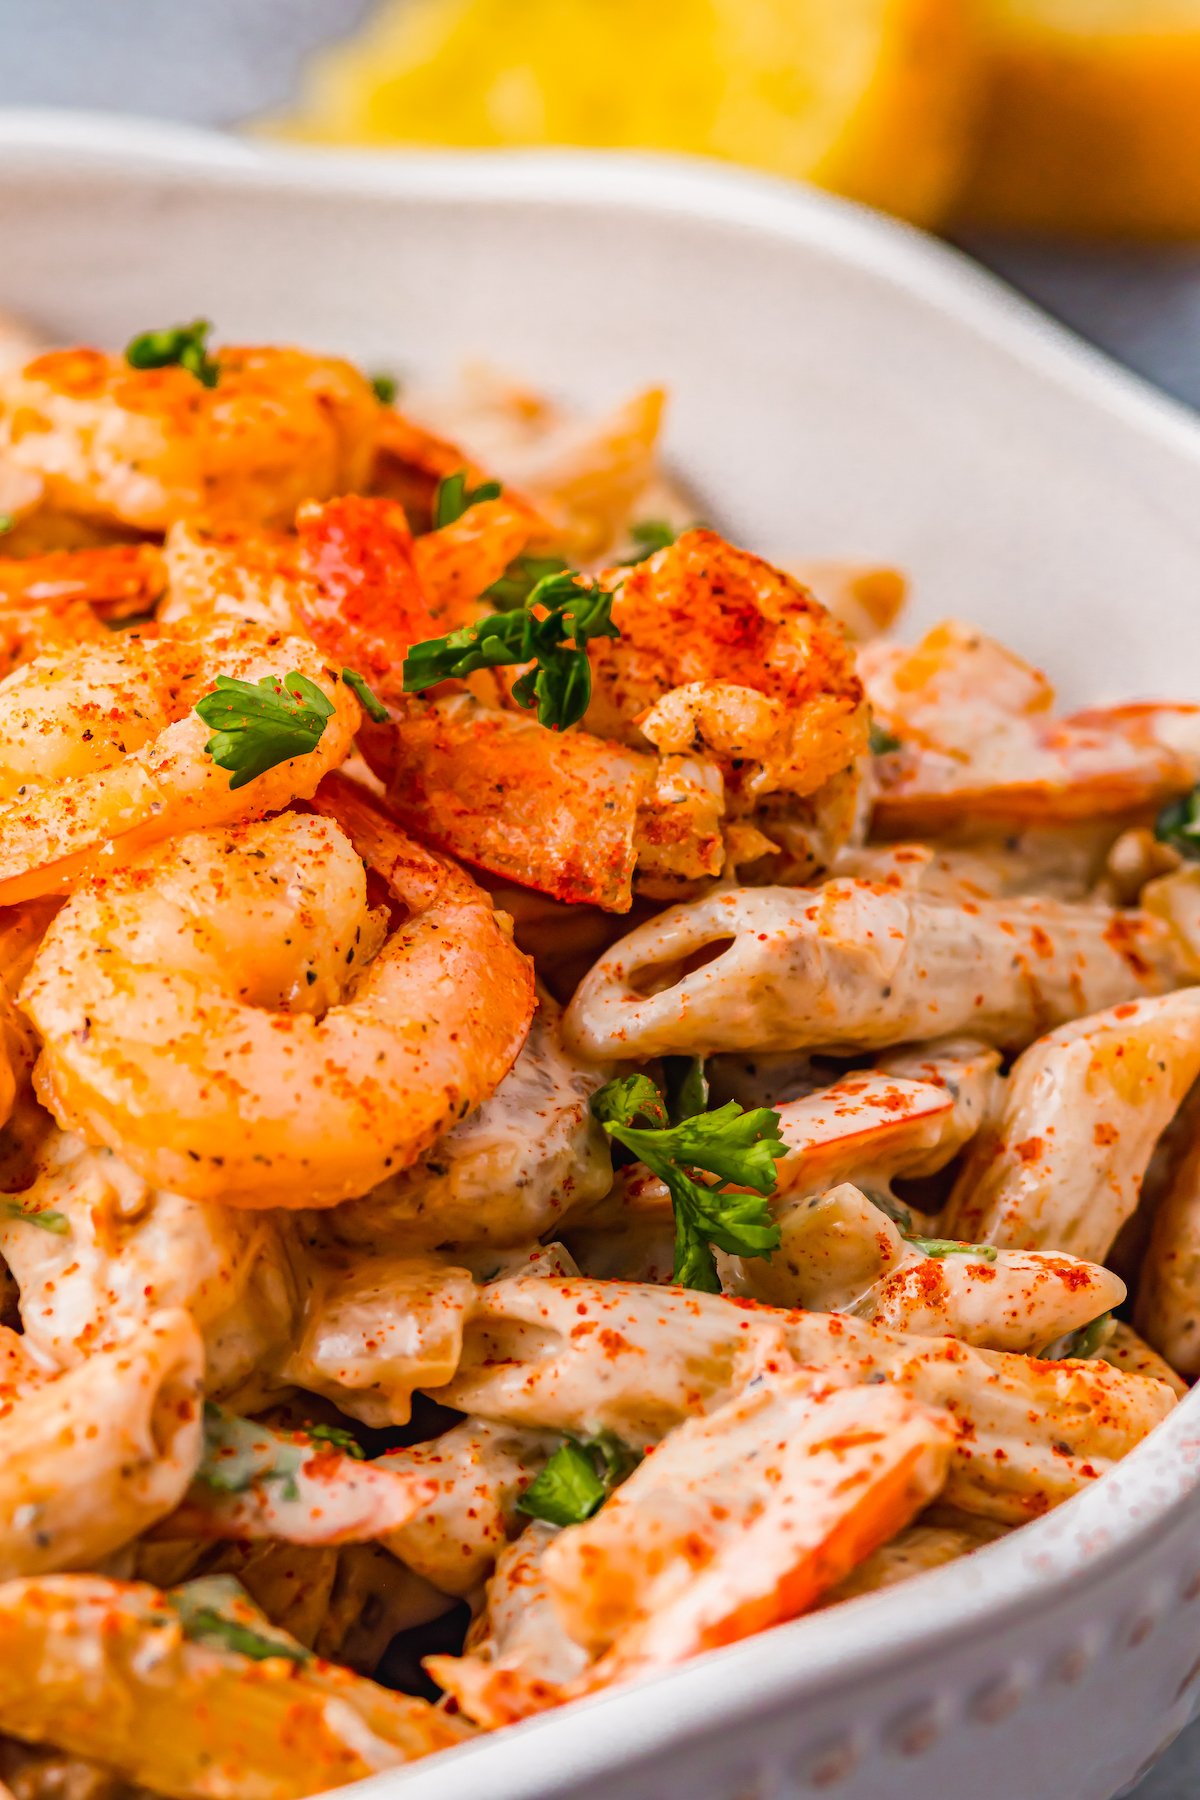 Cajun shrimp pasta in a white bowl with a scalloped edge.